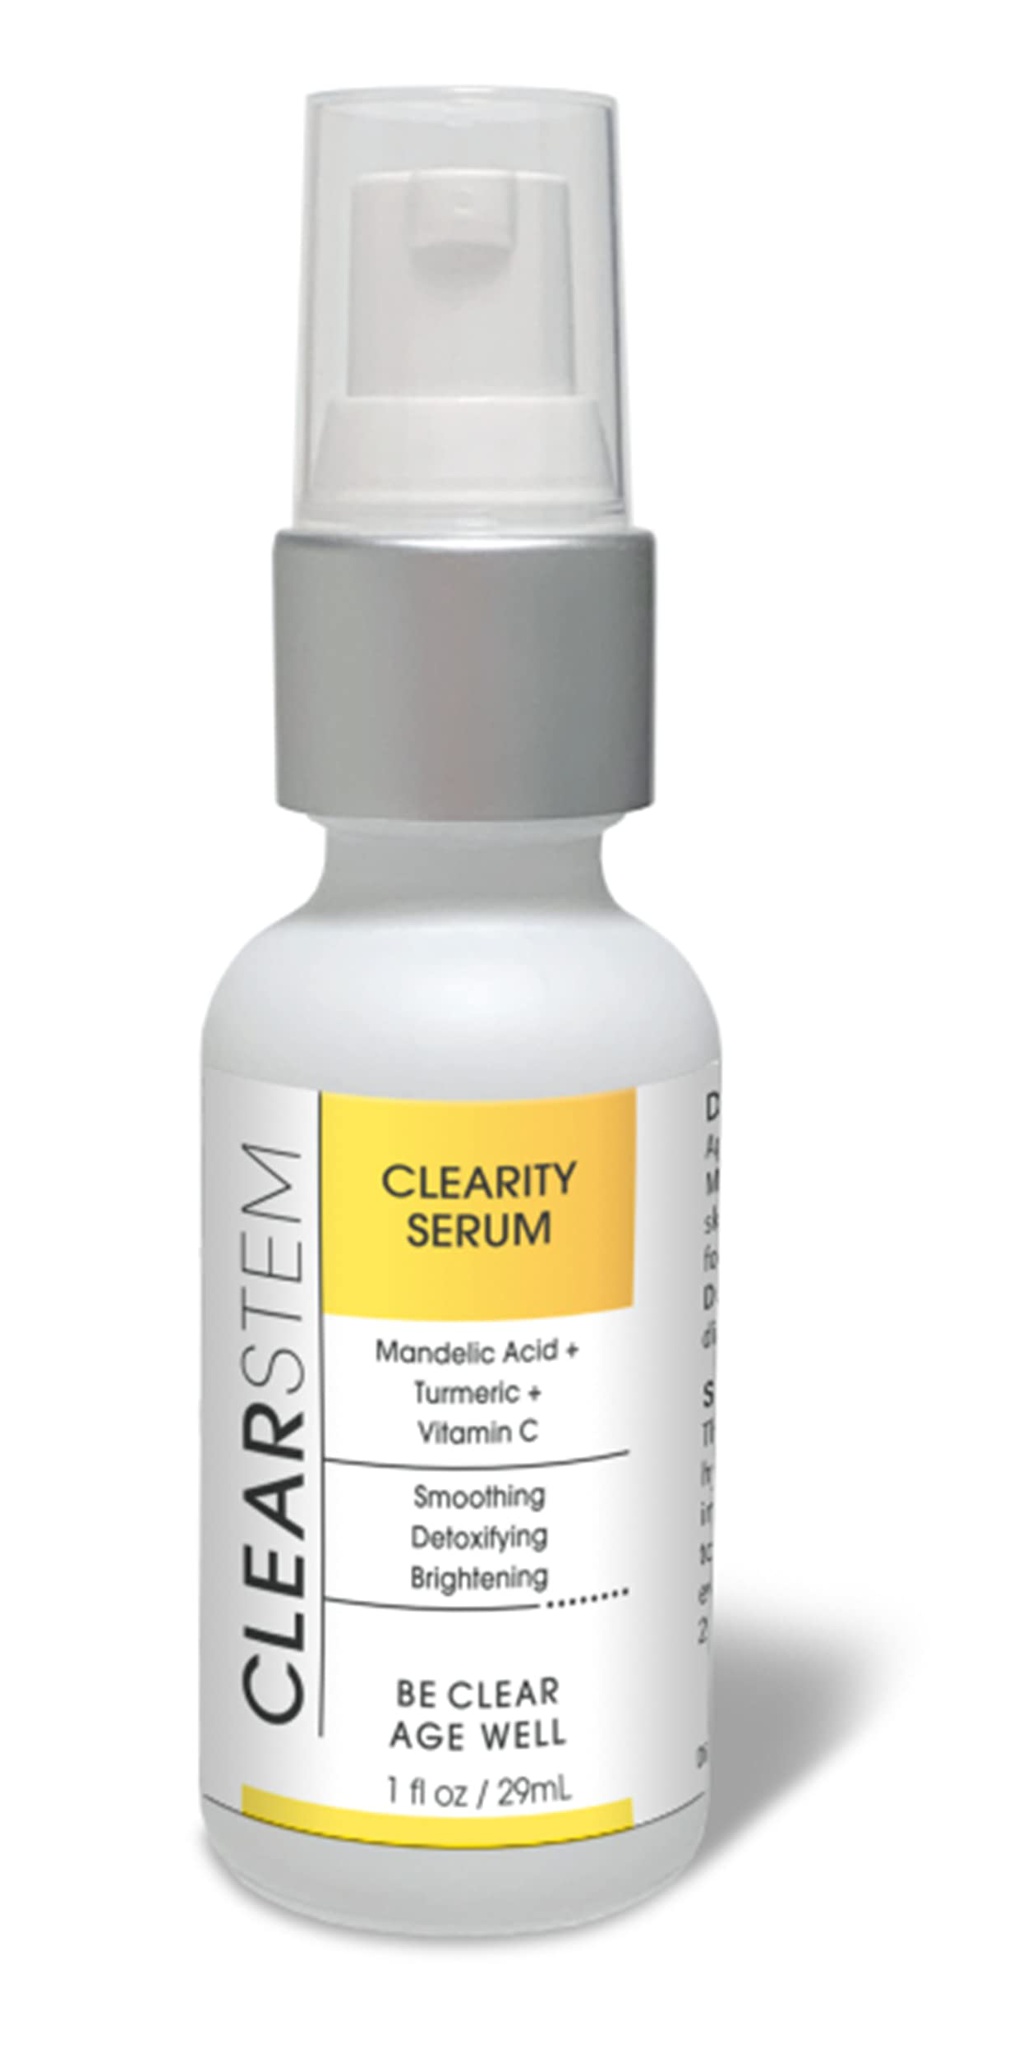 CLEARSTEM Skincare Clearity Serum